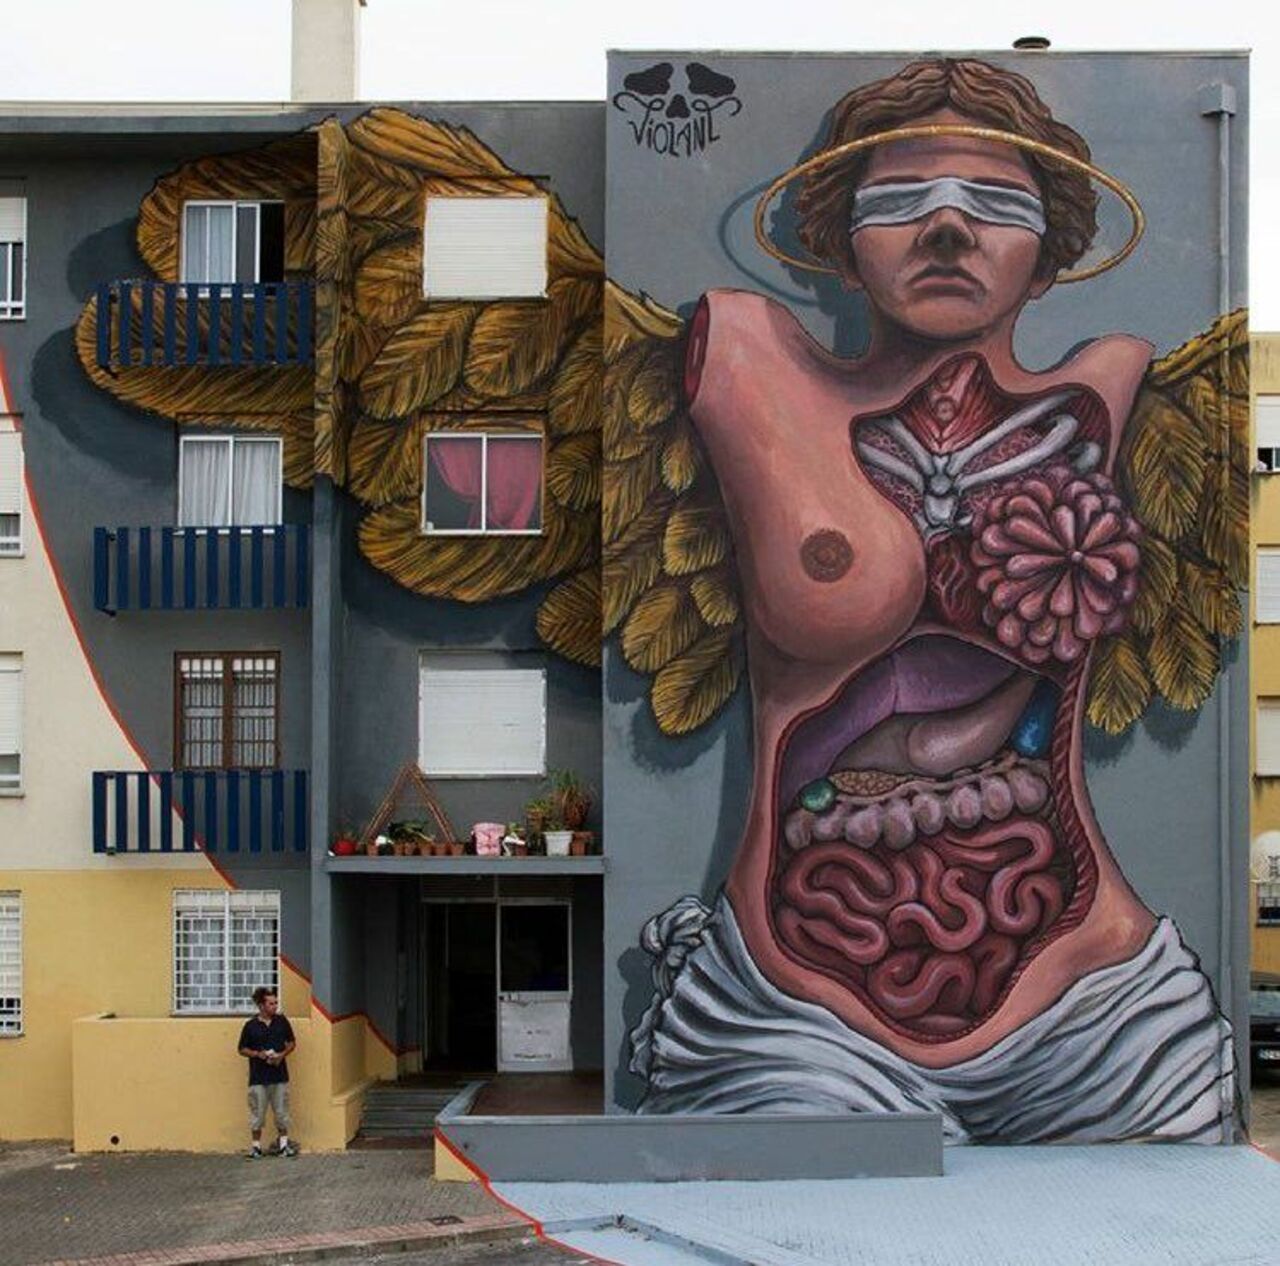 New Street Art by Violant  Loures Portugal 🇵🇹 #art #mural #graffiti #streetart https://t.co/2iW3bFeYAF